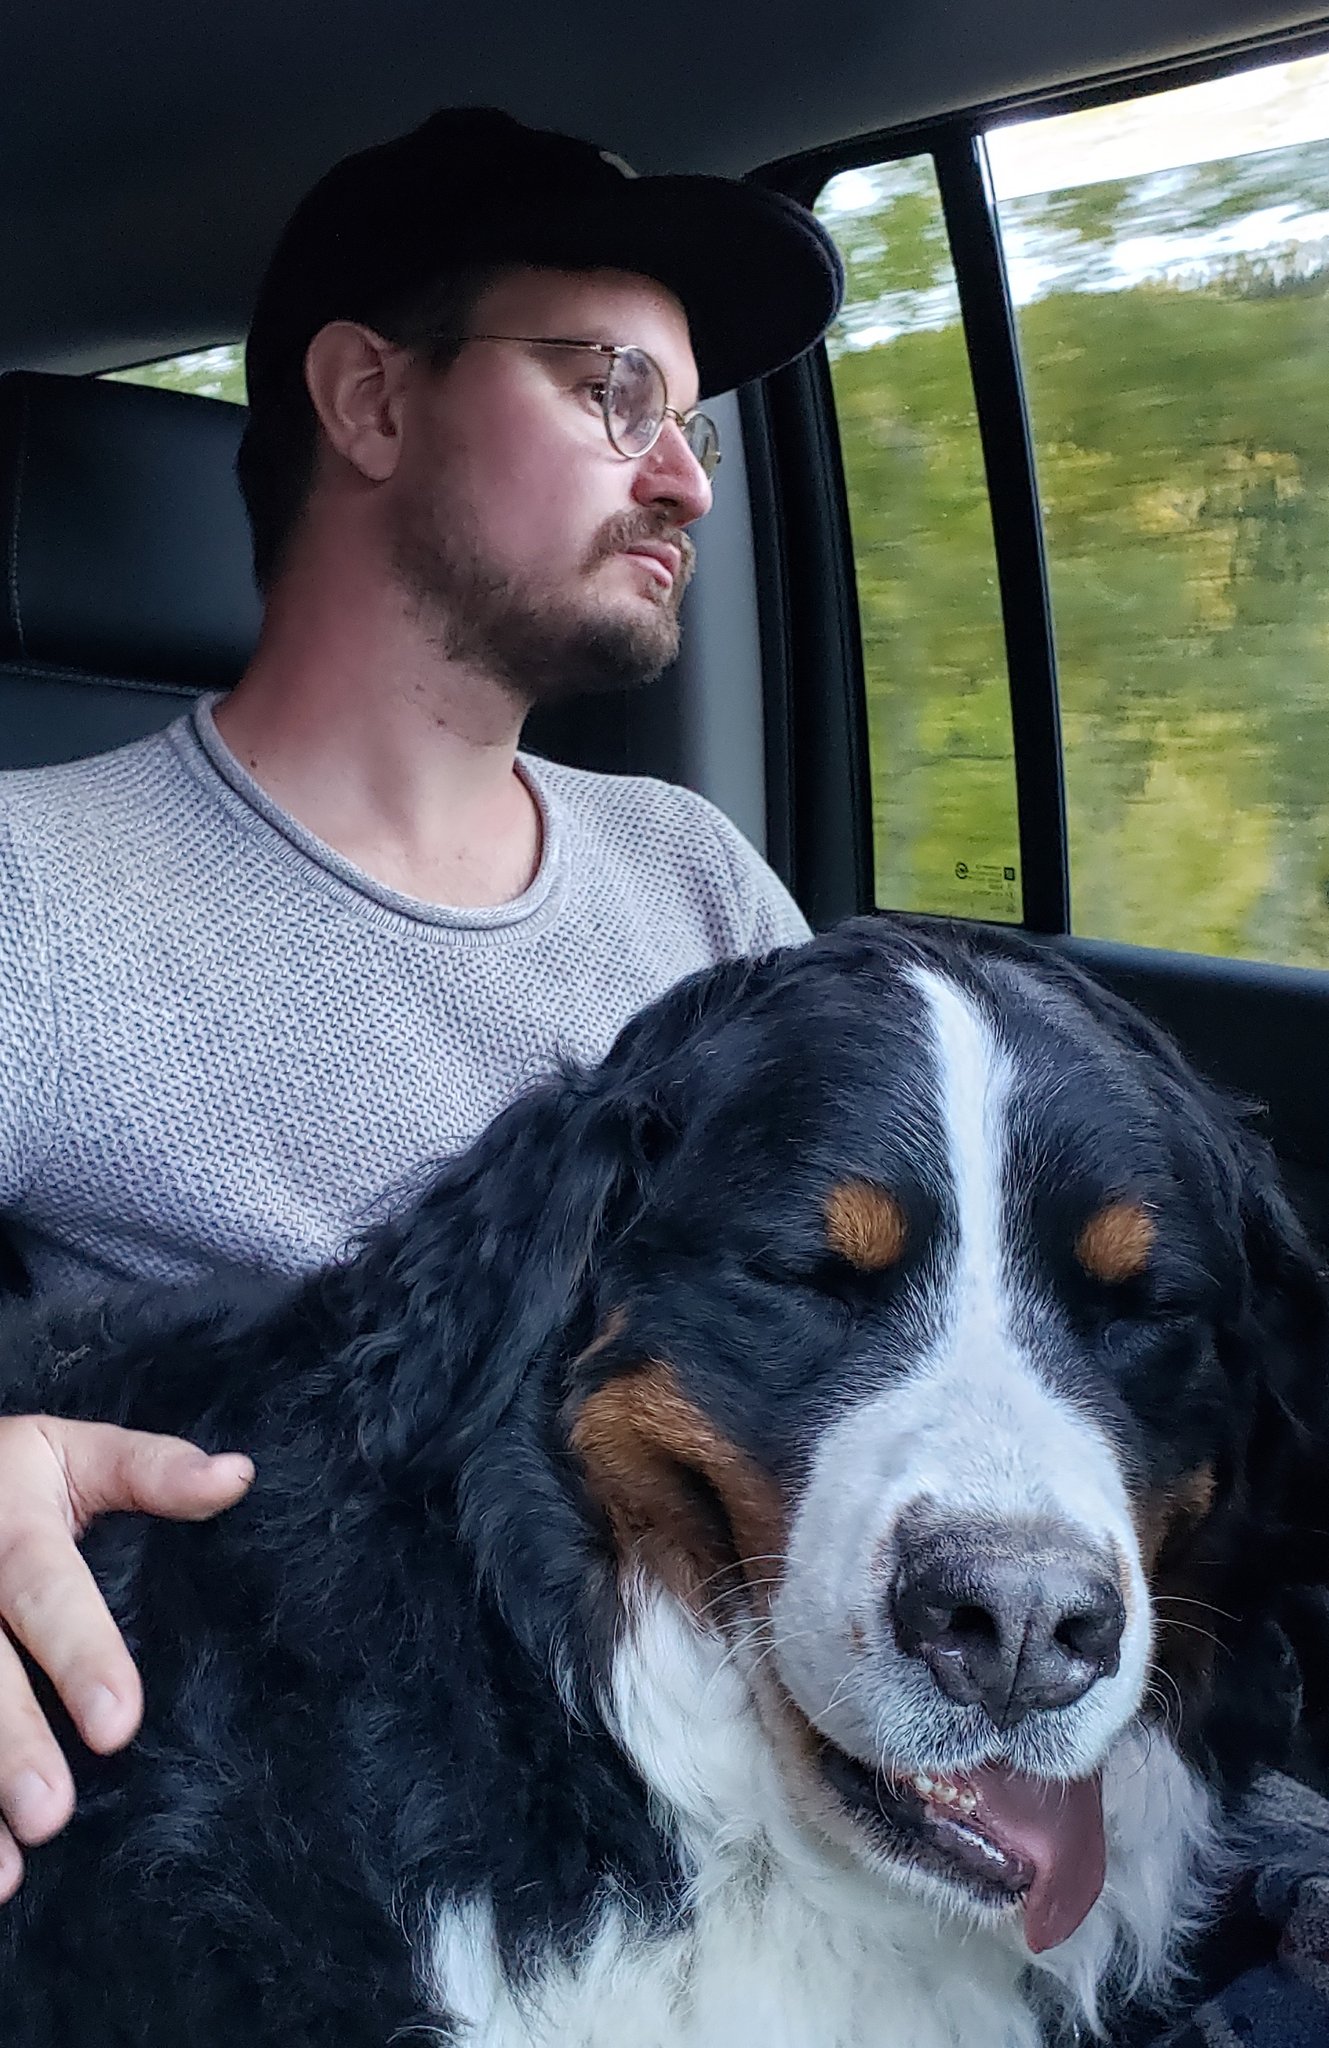 A dog sleeps in a car